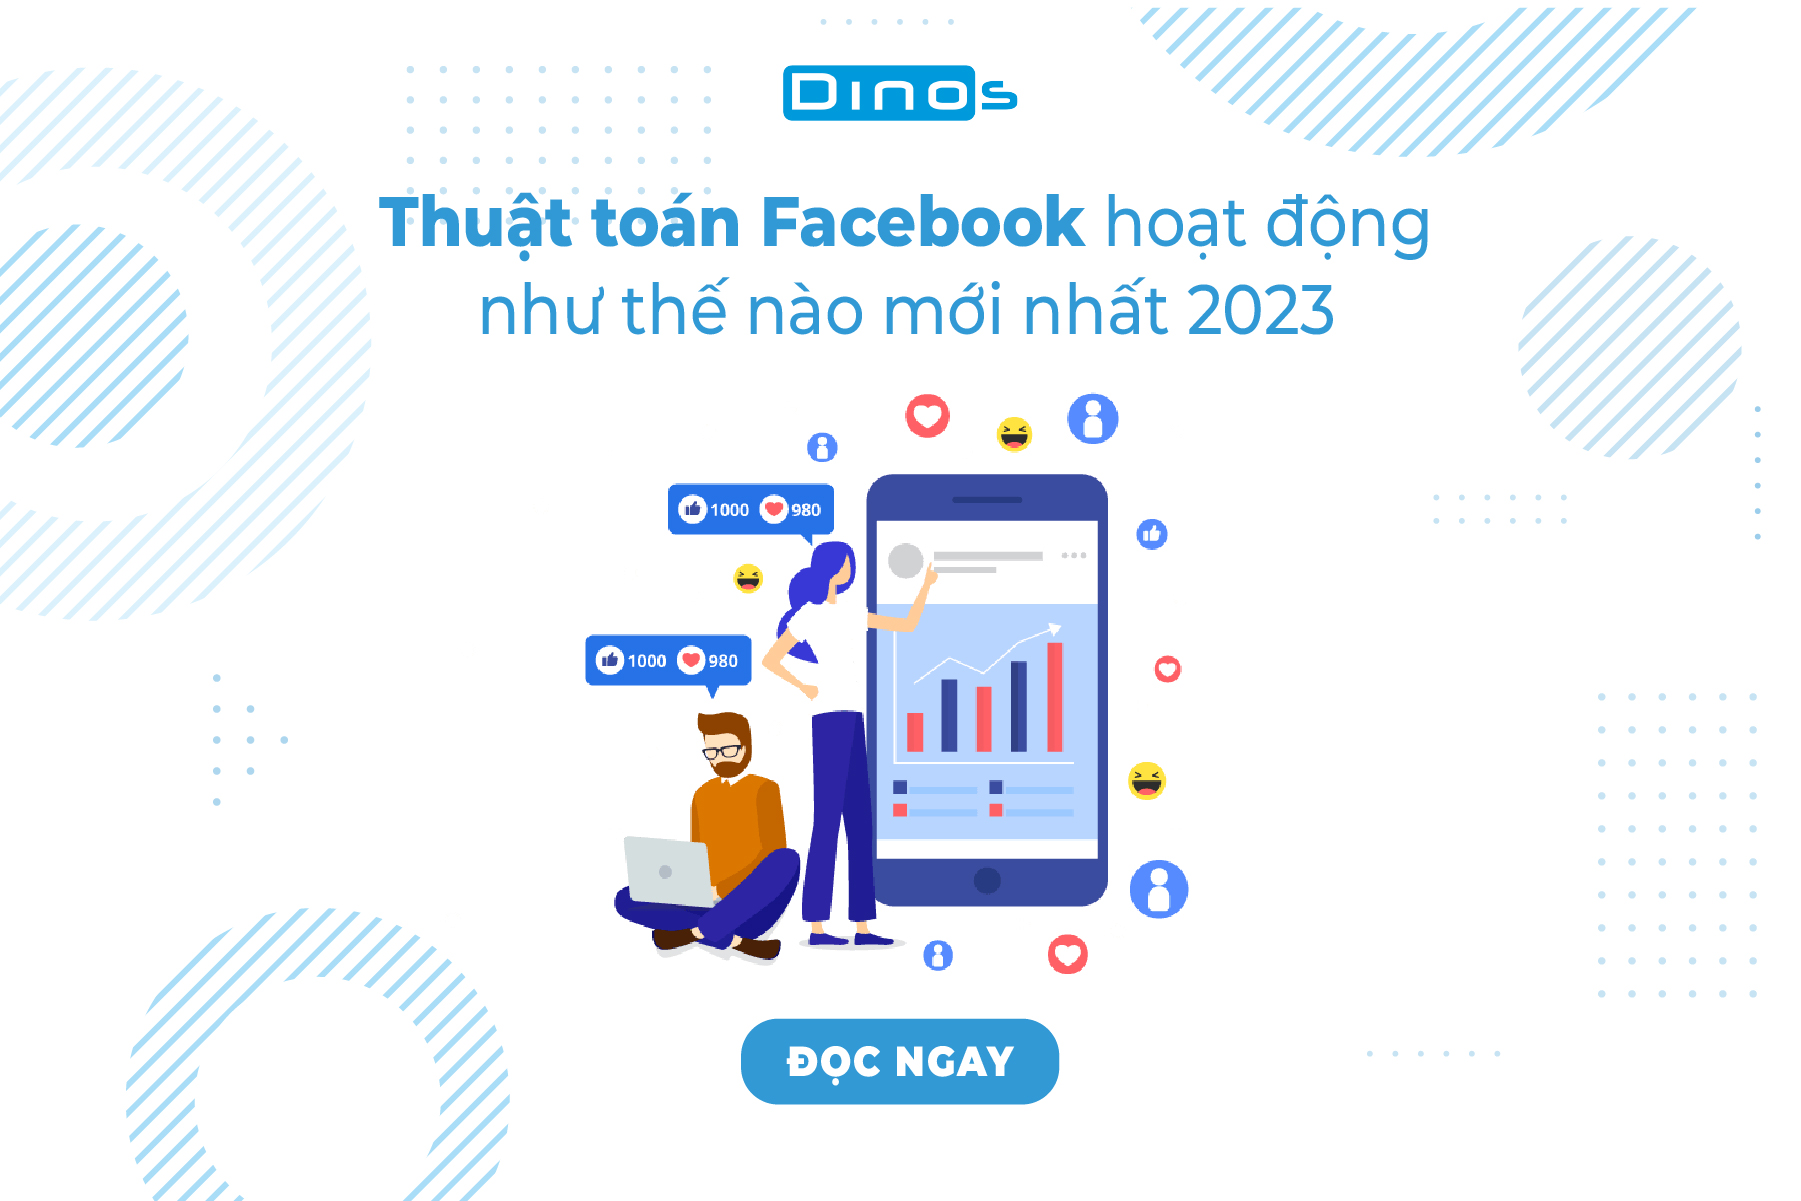 Thuat toan Facebook hoat dong nhu the nao moi nhat